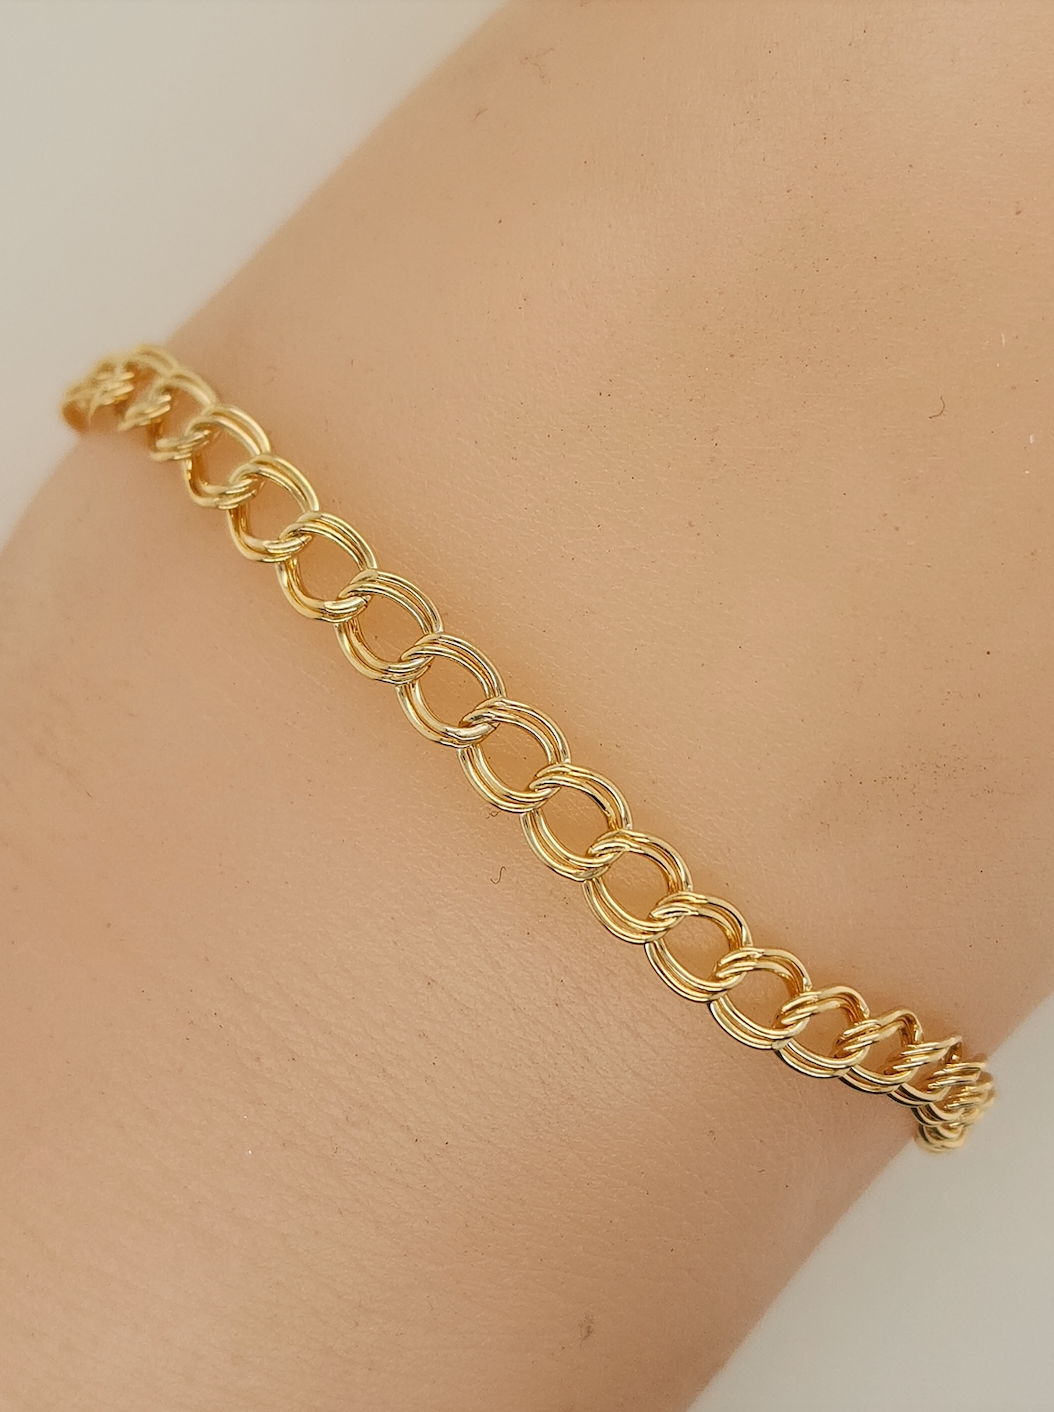 Gold Double Cable Bracelet - Going Golden